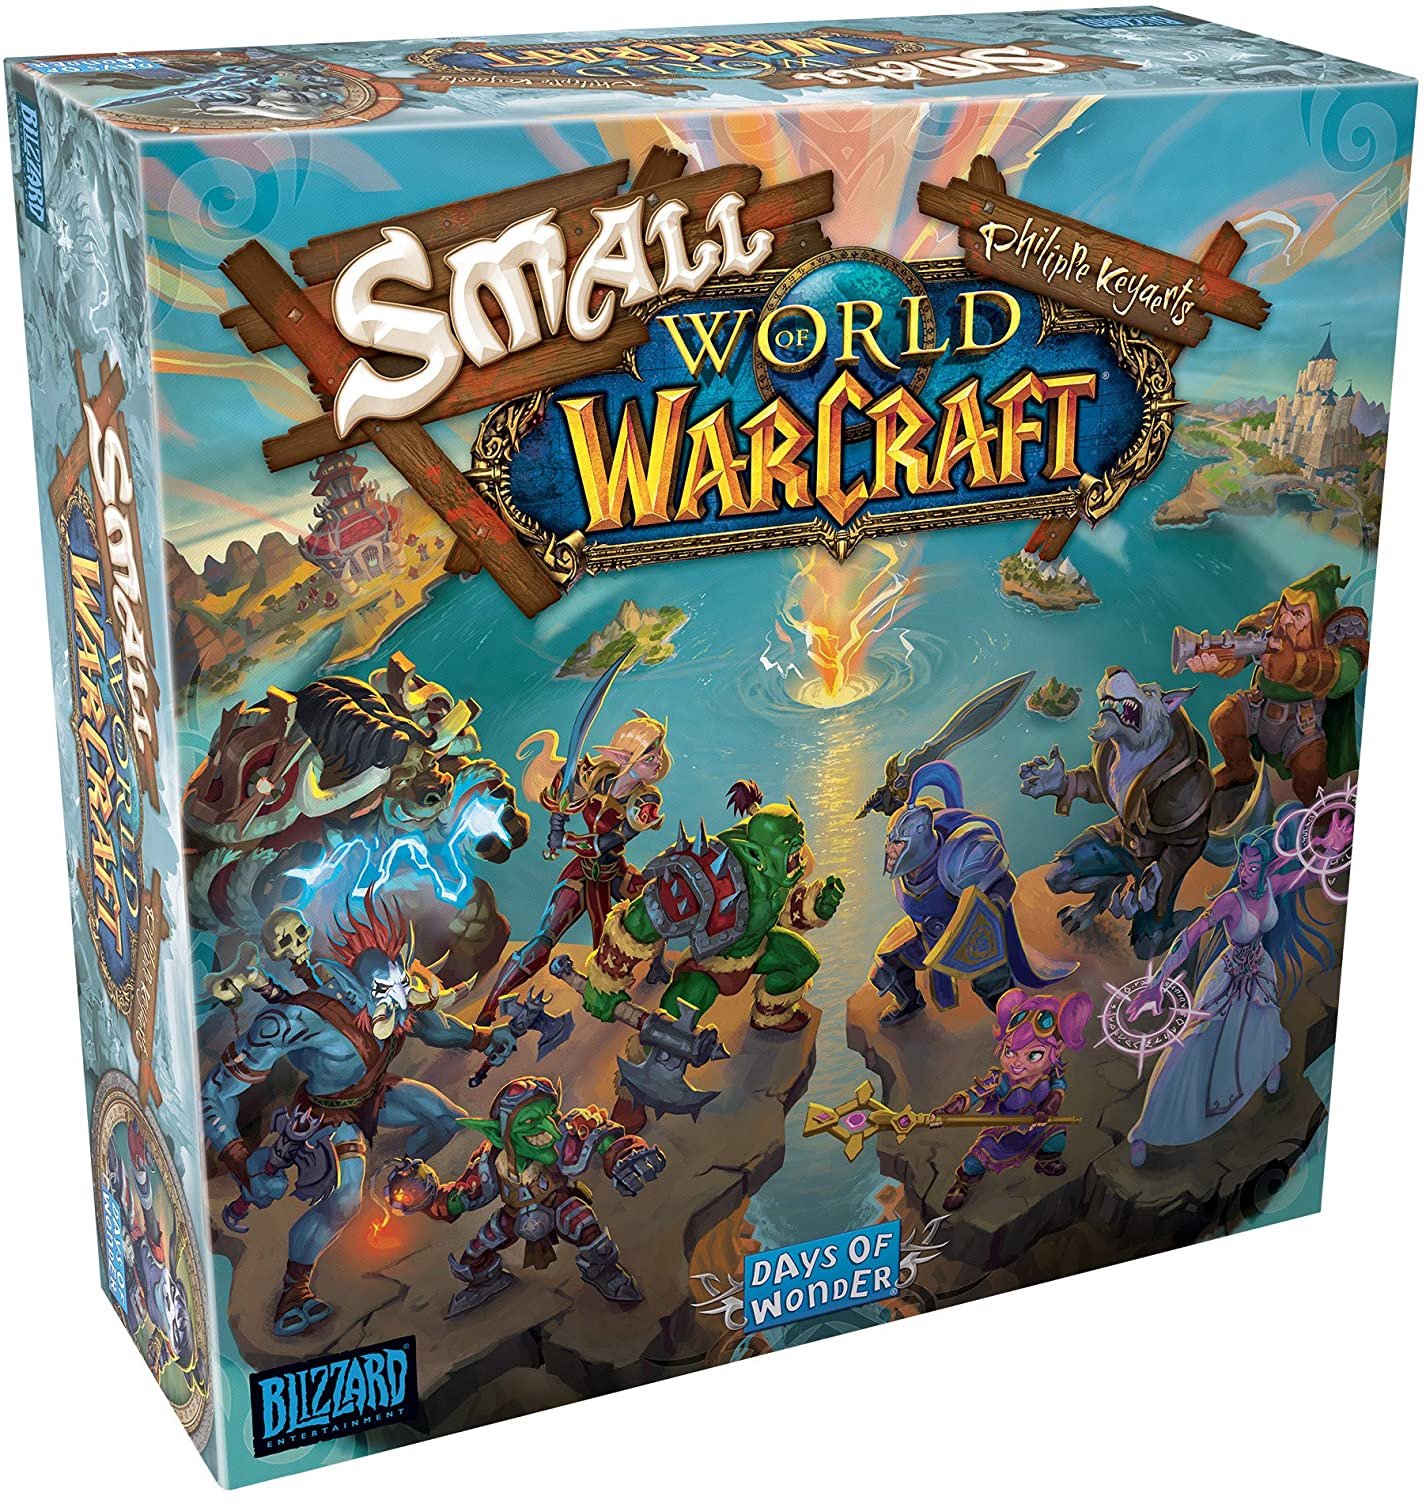 Small World of Warcraft - EN